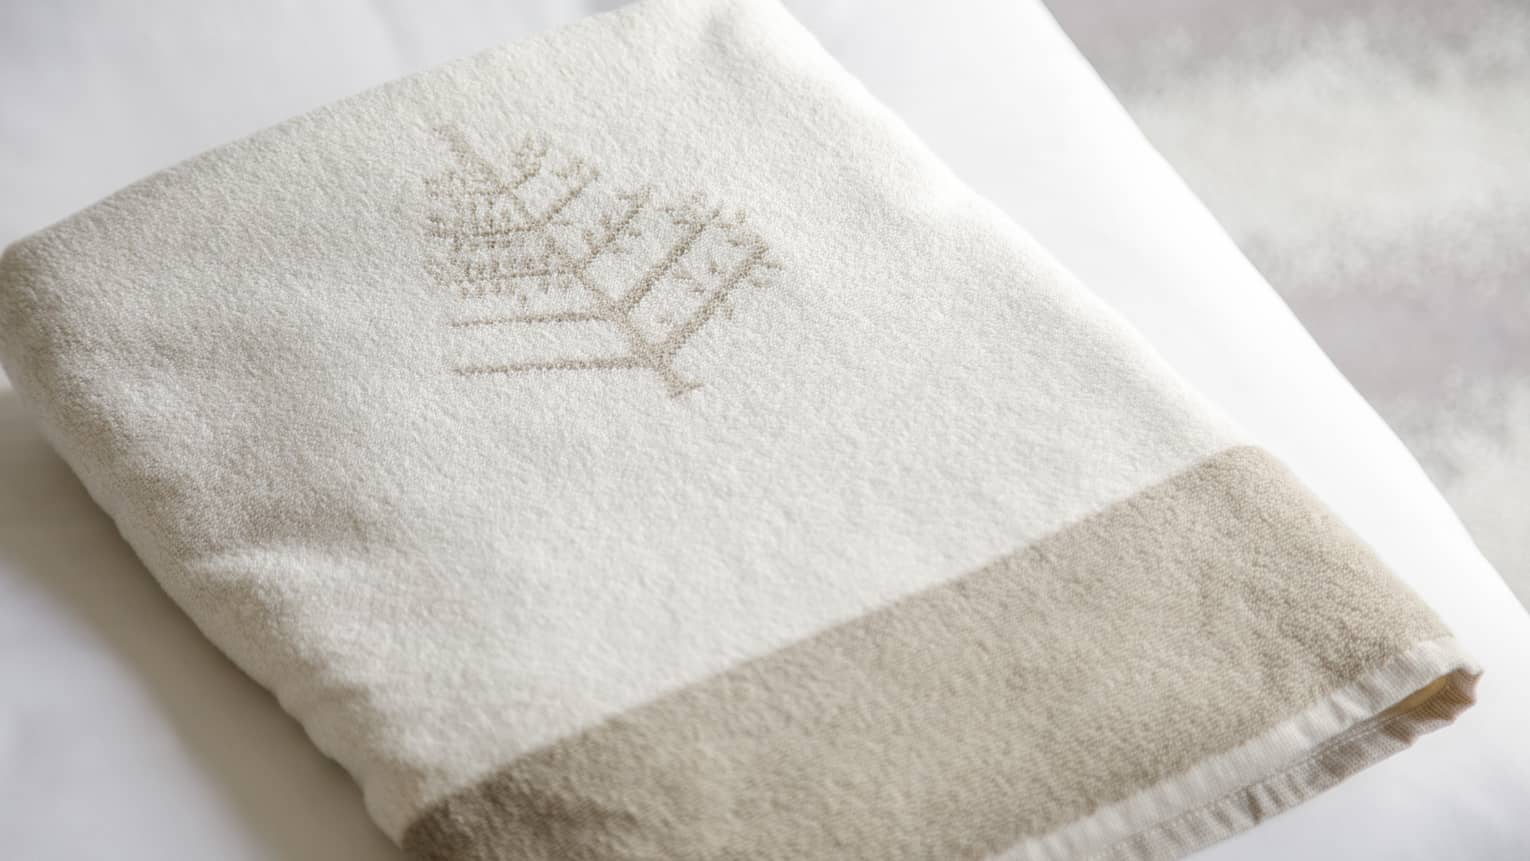 Two-tone towel with Four Seasons logo